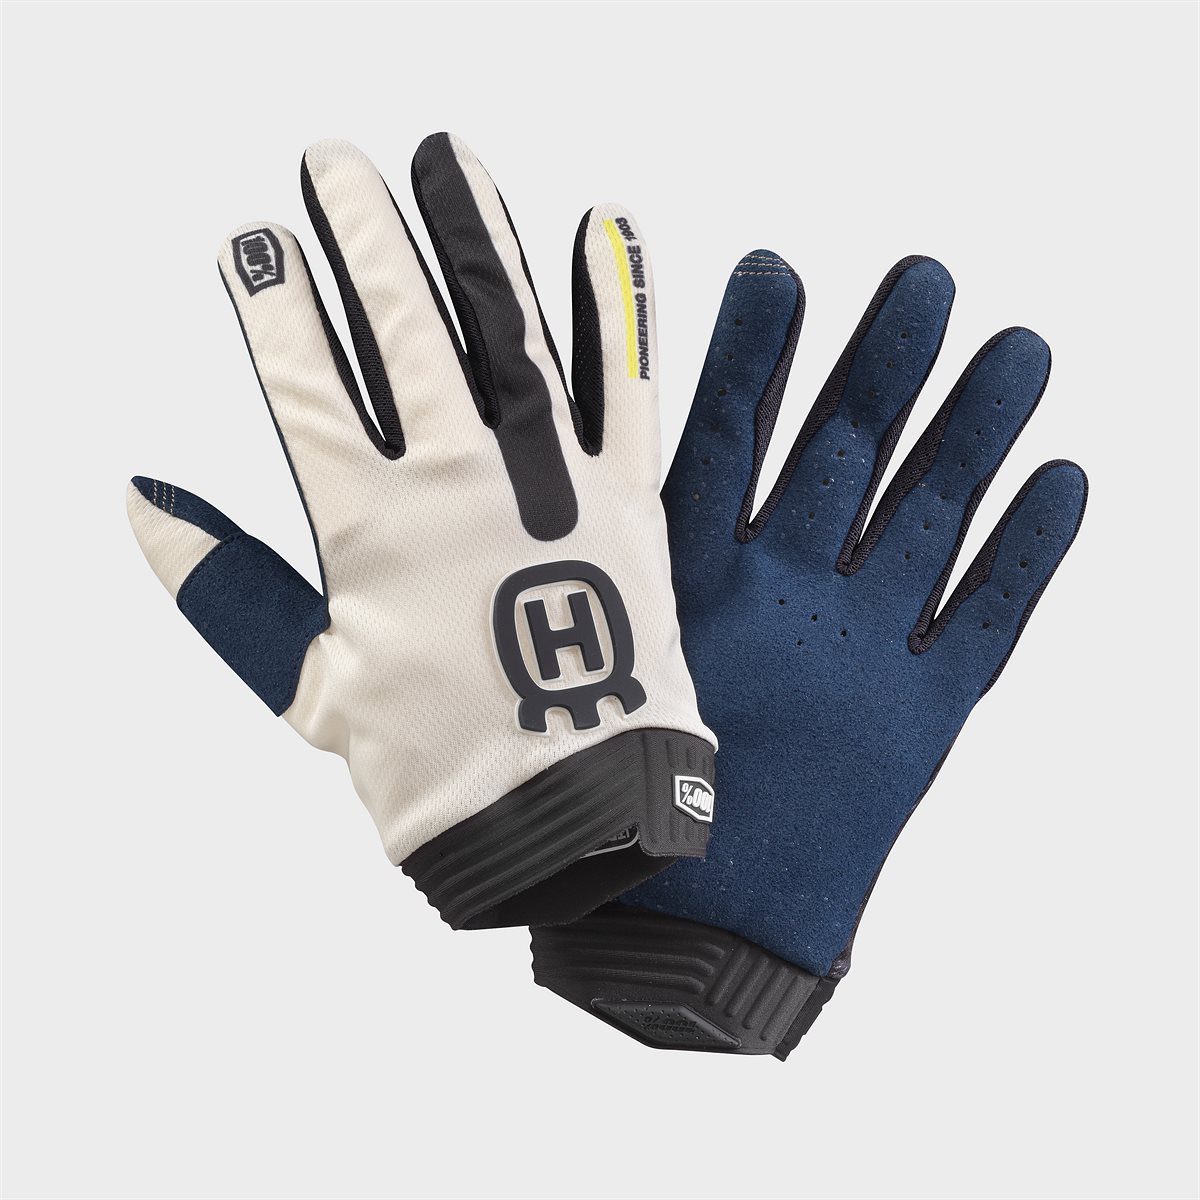 iTrack Origin Gloves (2)